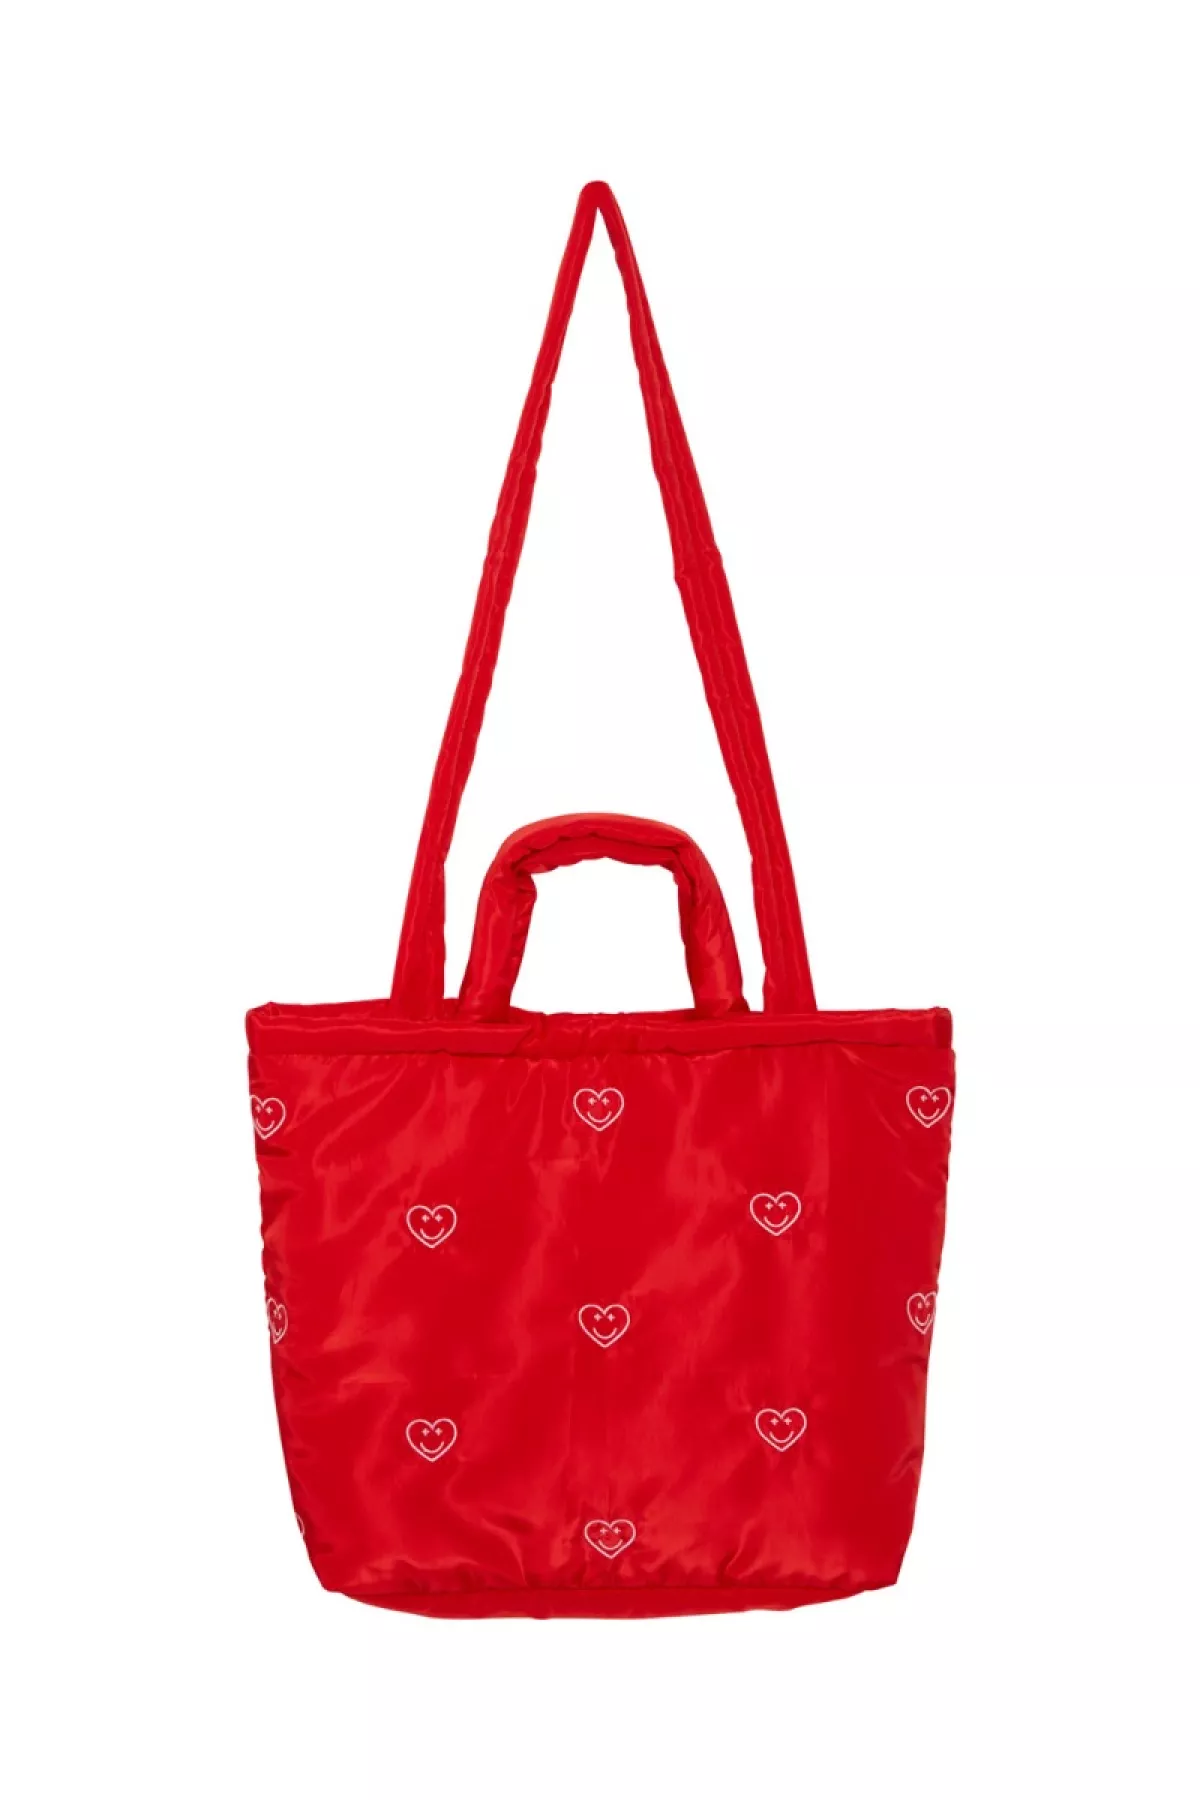 #1 - Ichi - Taske - IA Mea Smiley Shopper Bag - Poppy Red